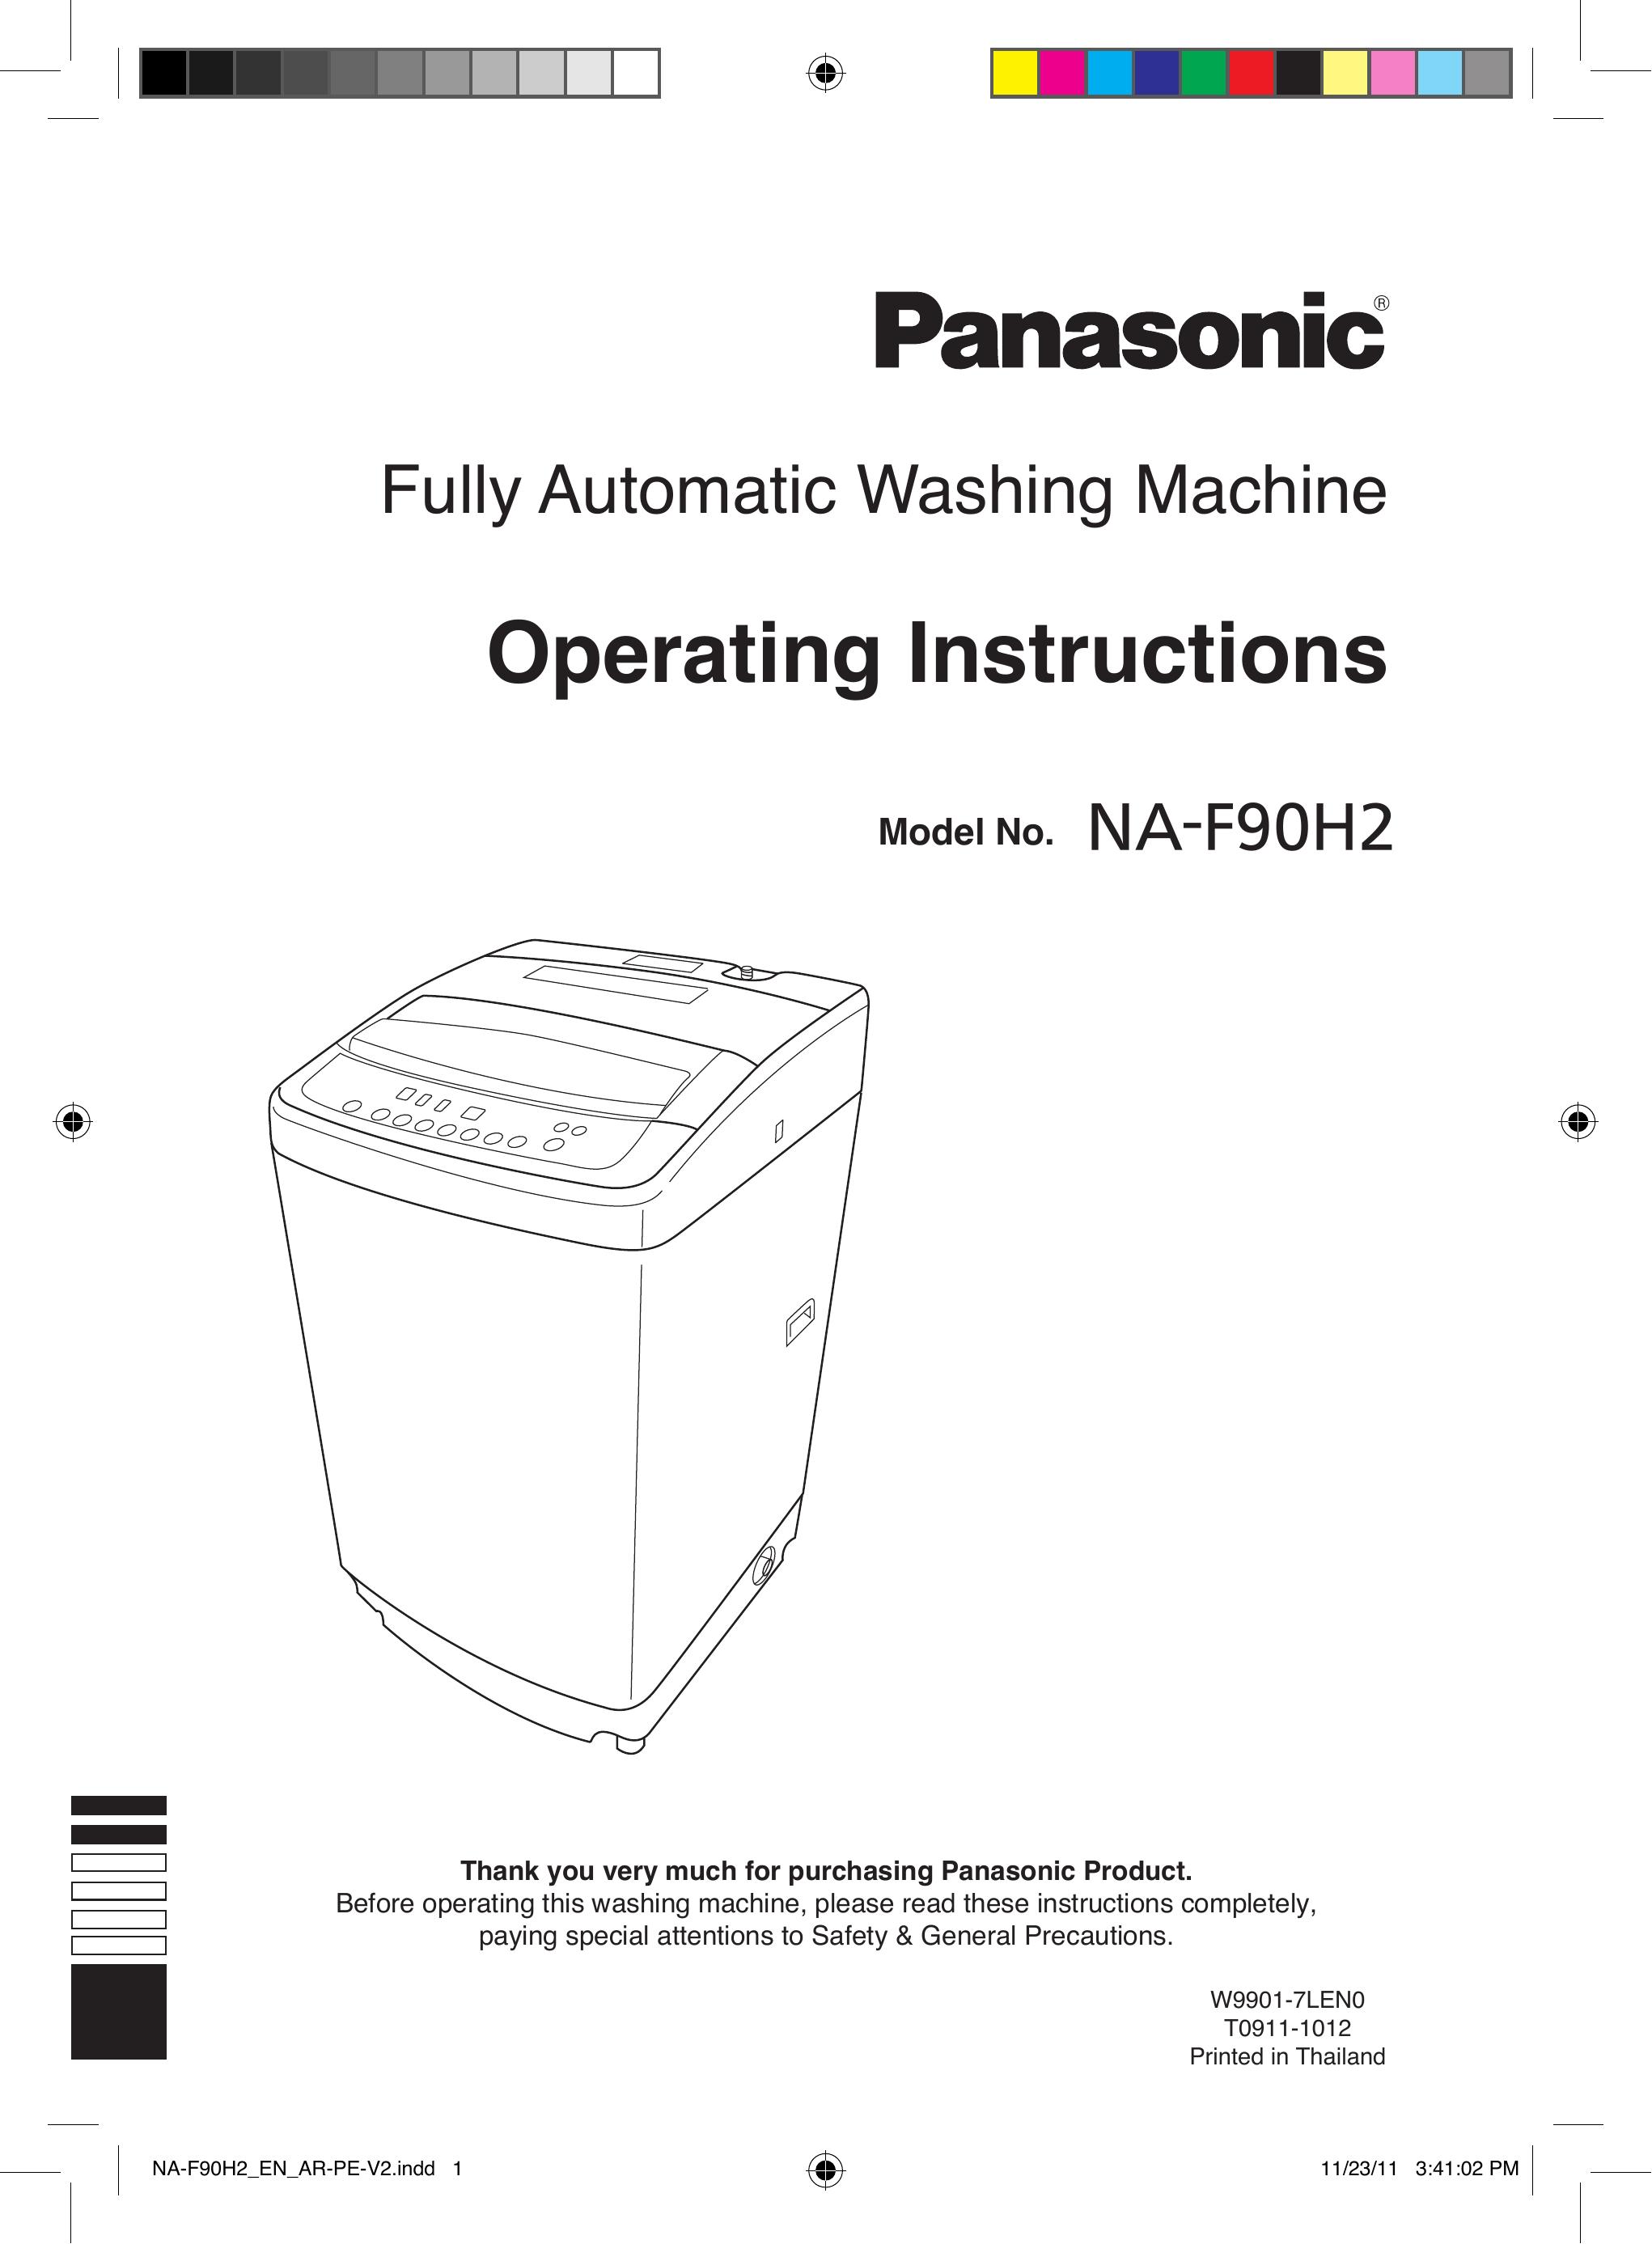 Panasonic NA-F90H2 Washer User Manual